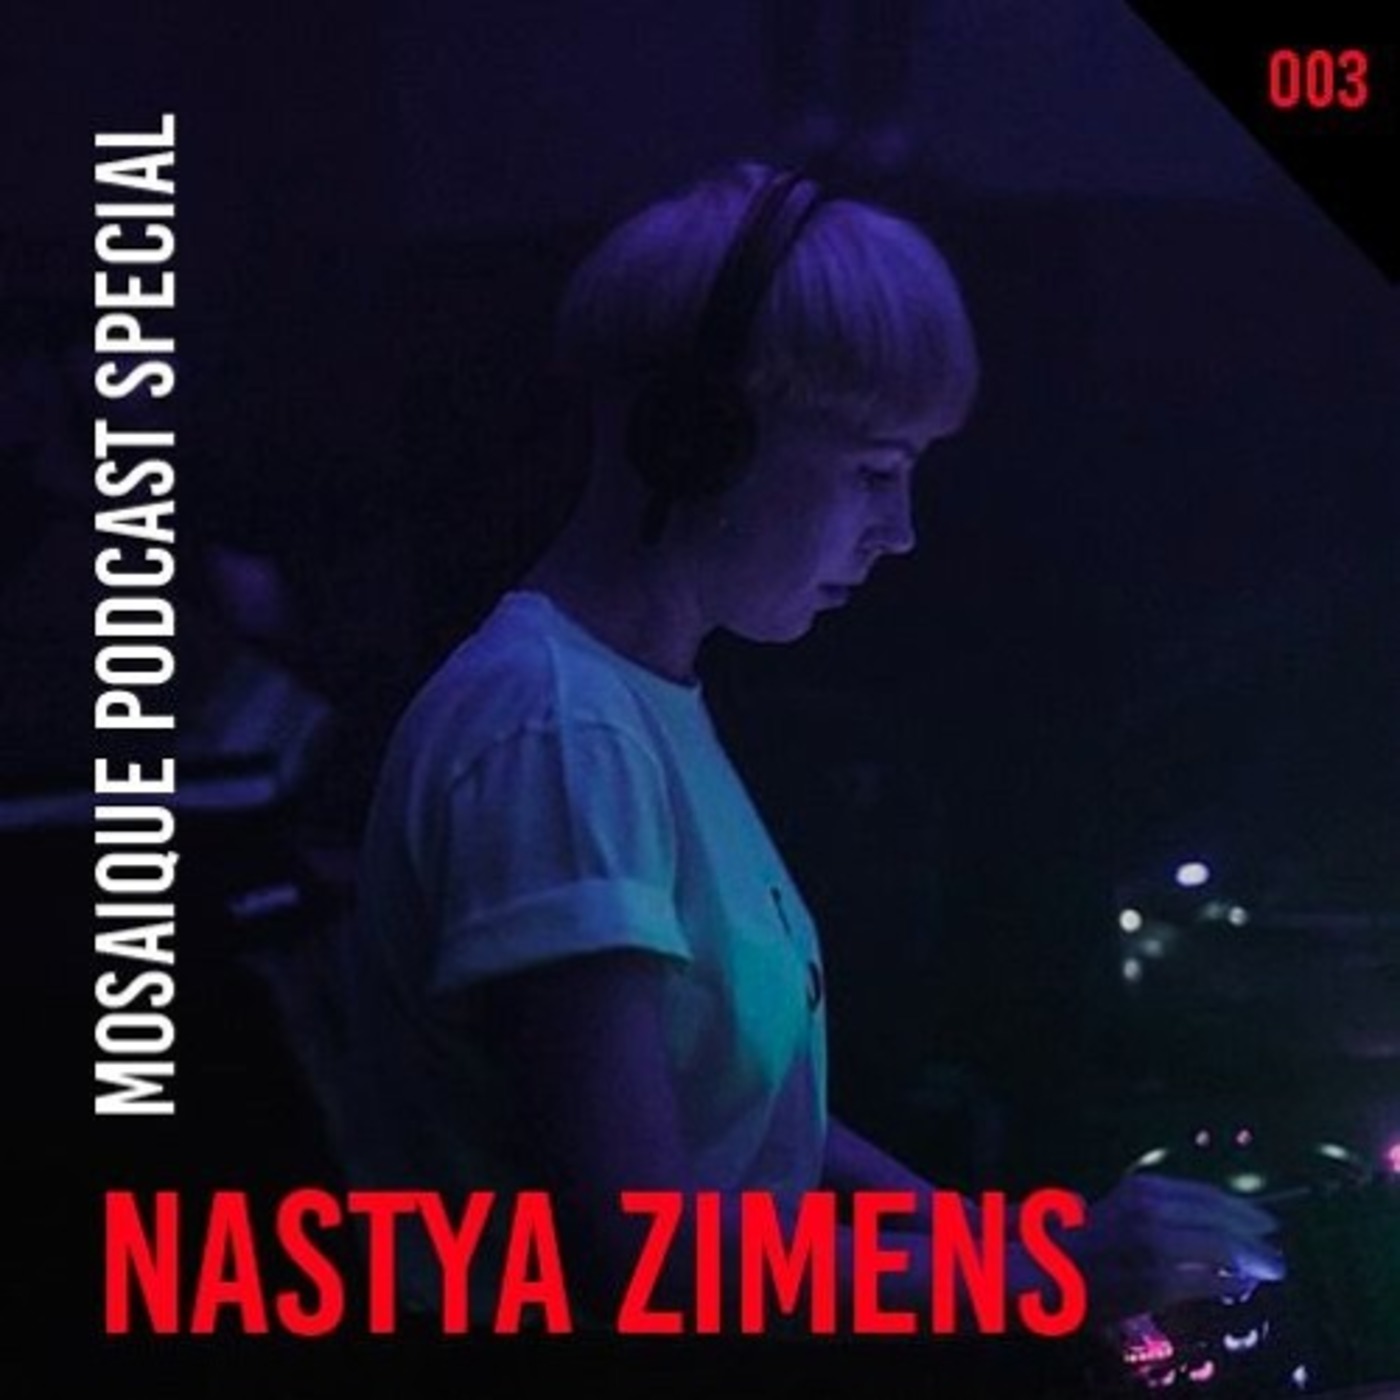 Nastya Zimens - Mosaique Podcast Special /003